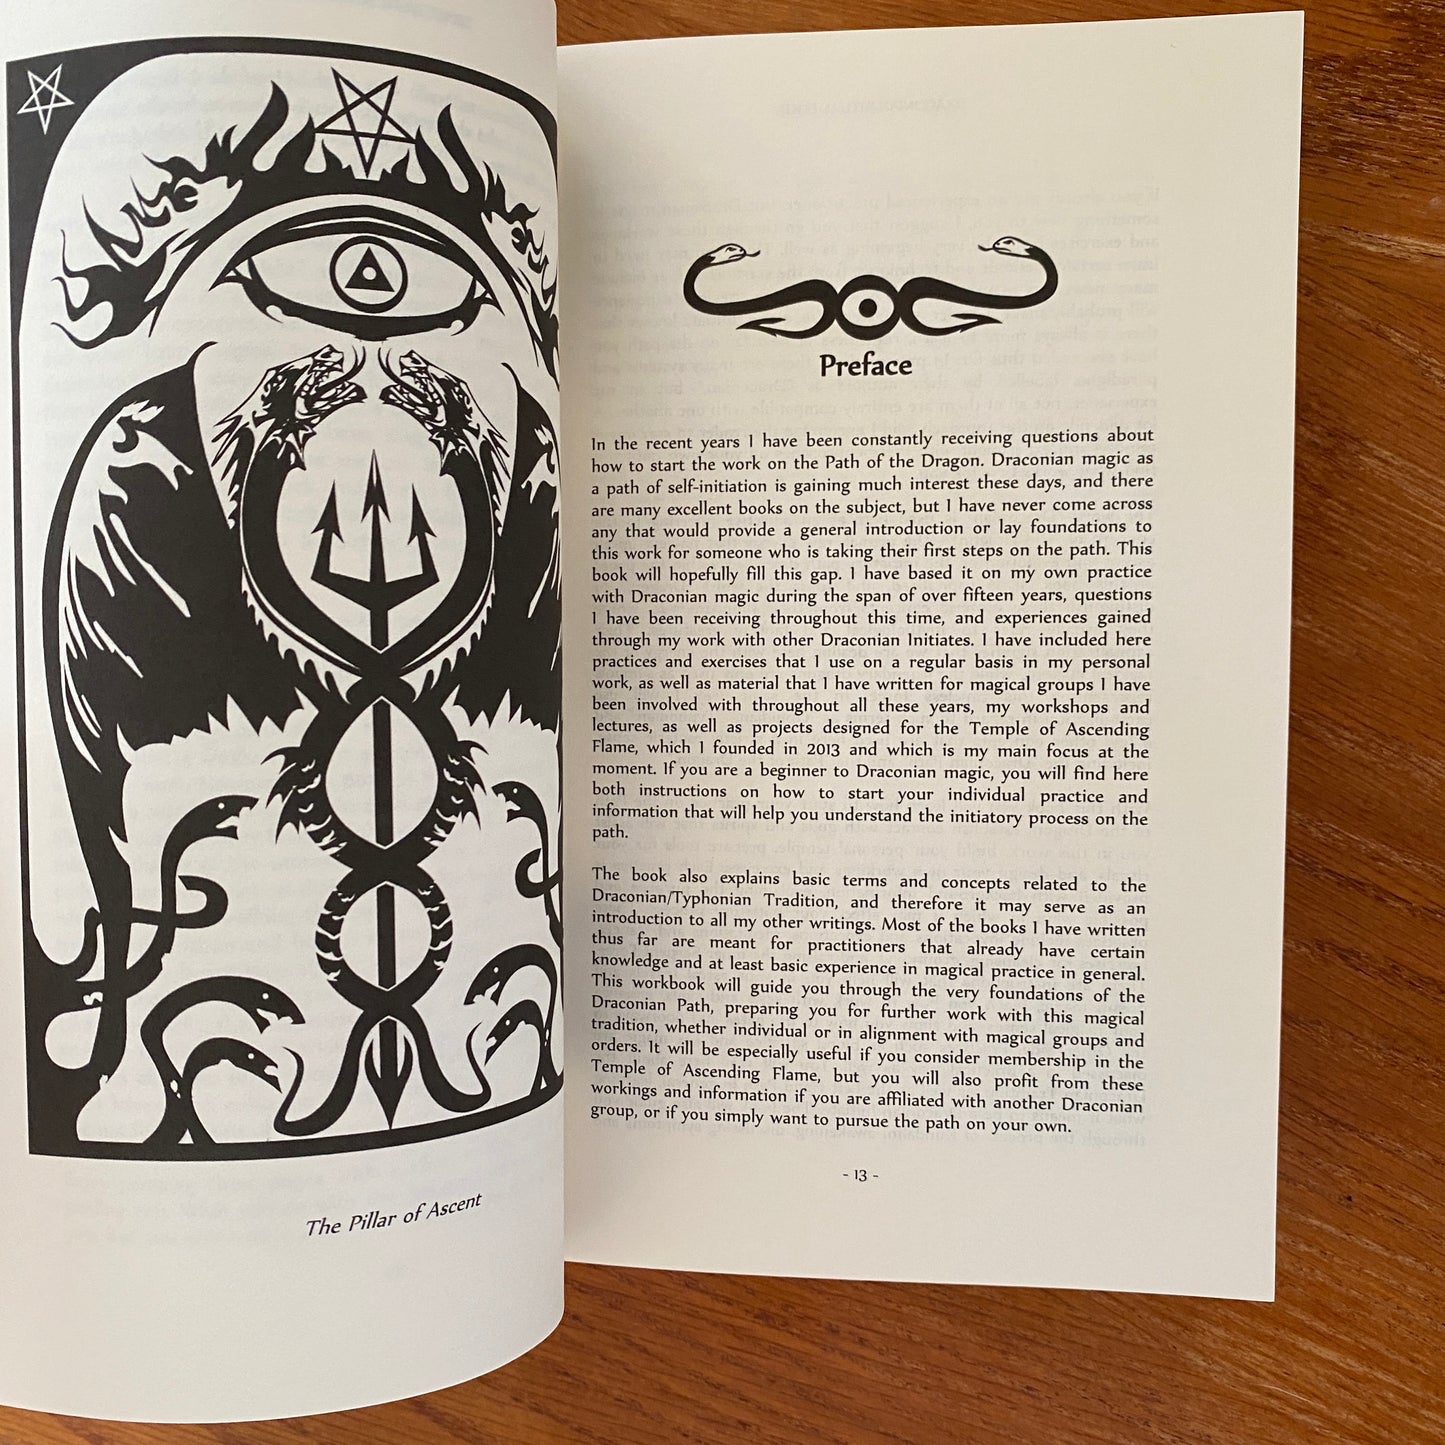 Draconian Ritual Book Paperback - Asenath Mason